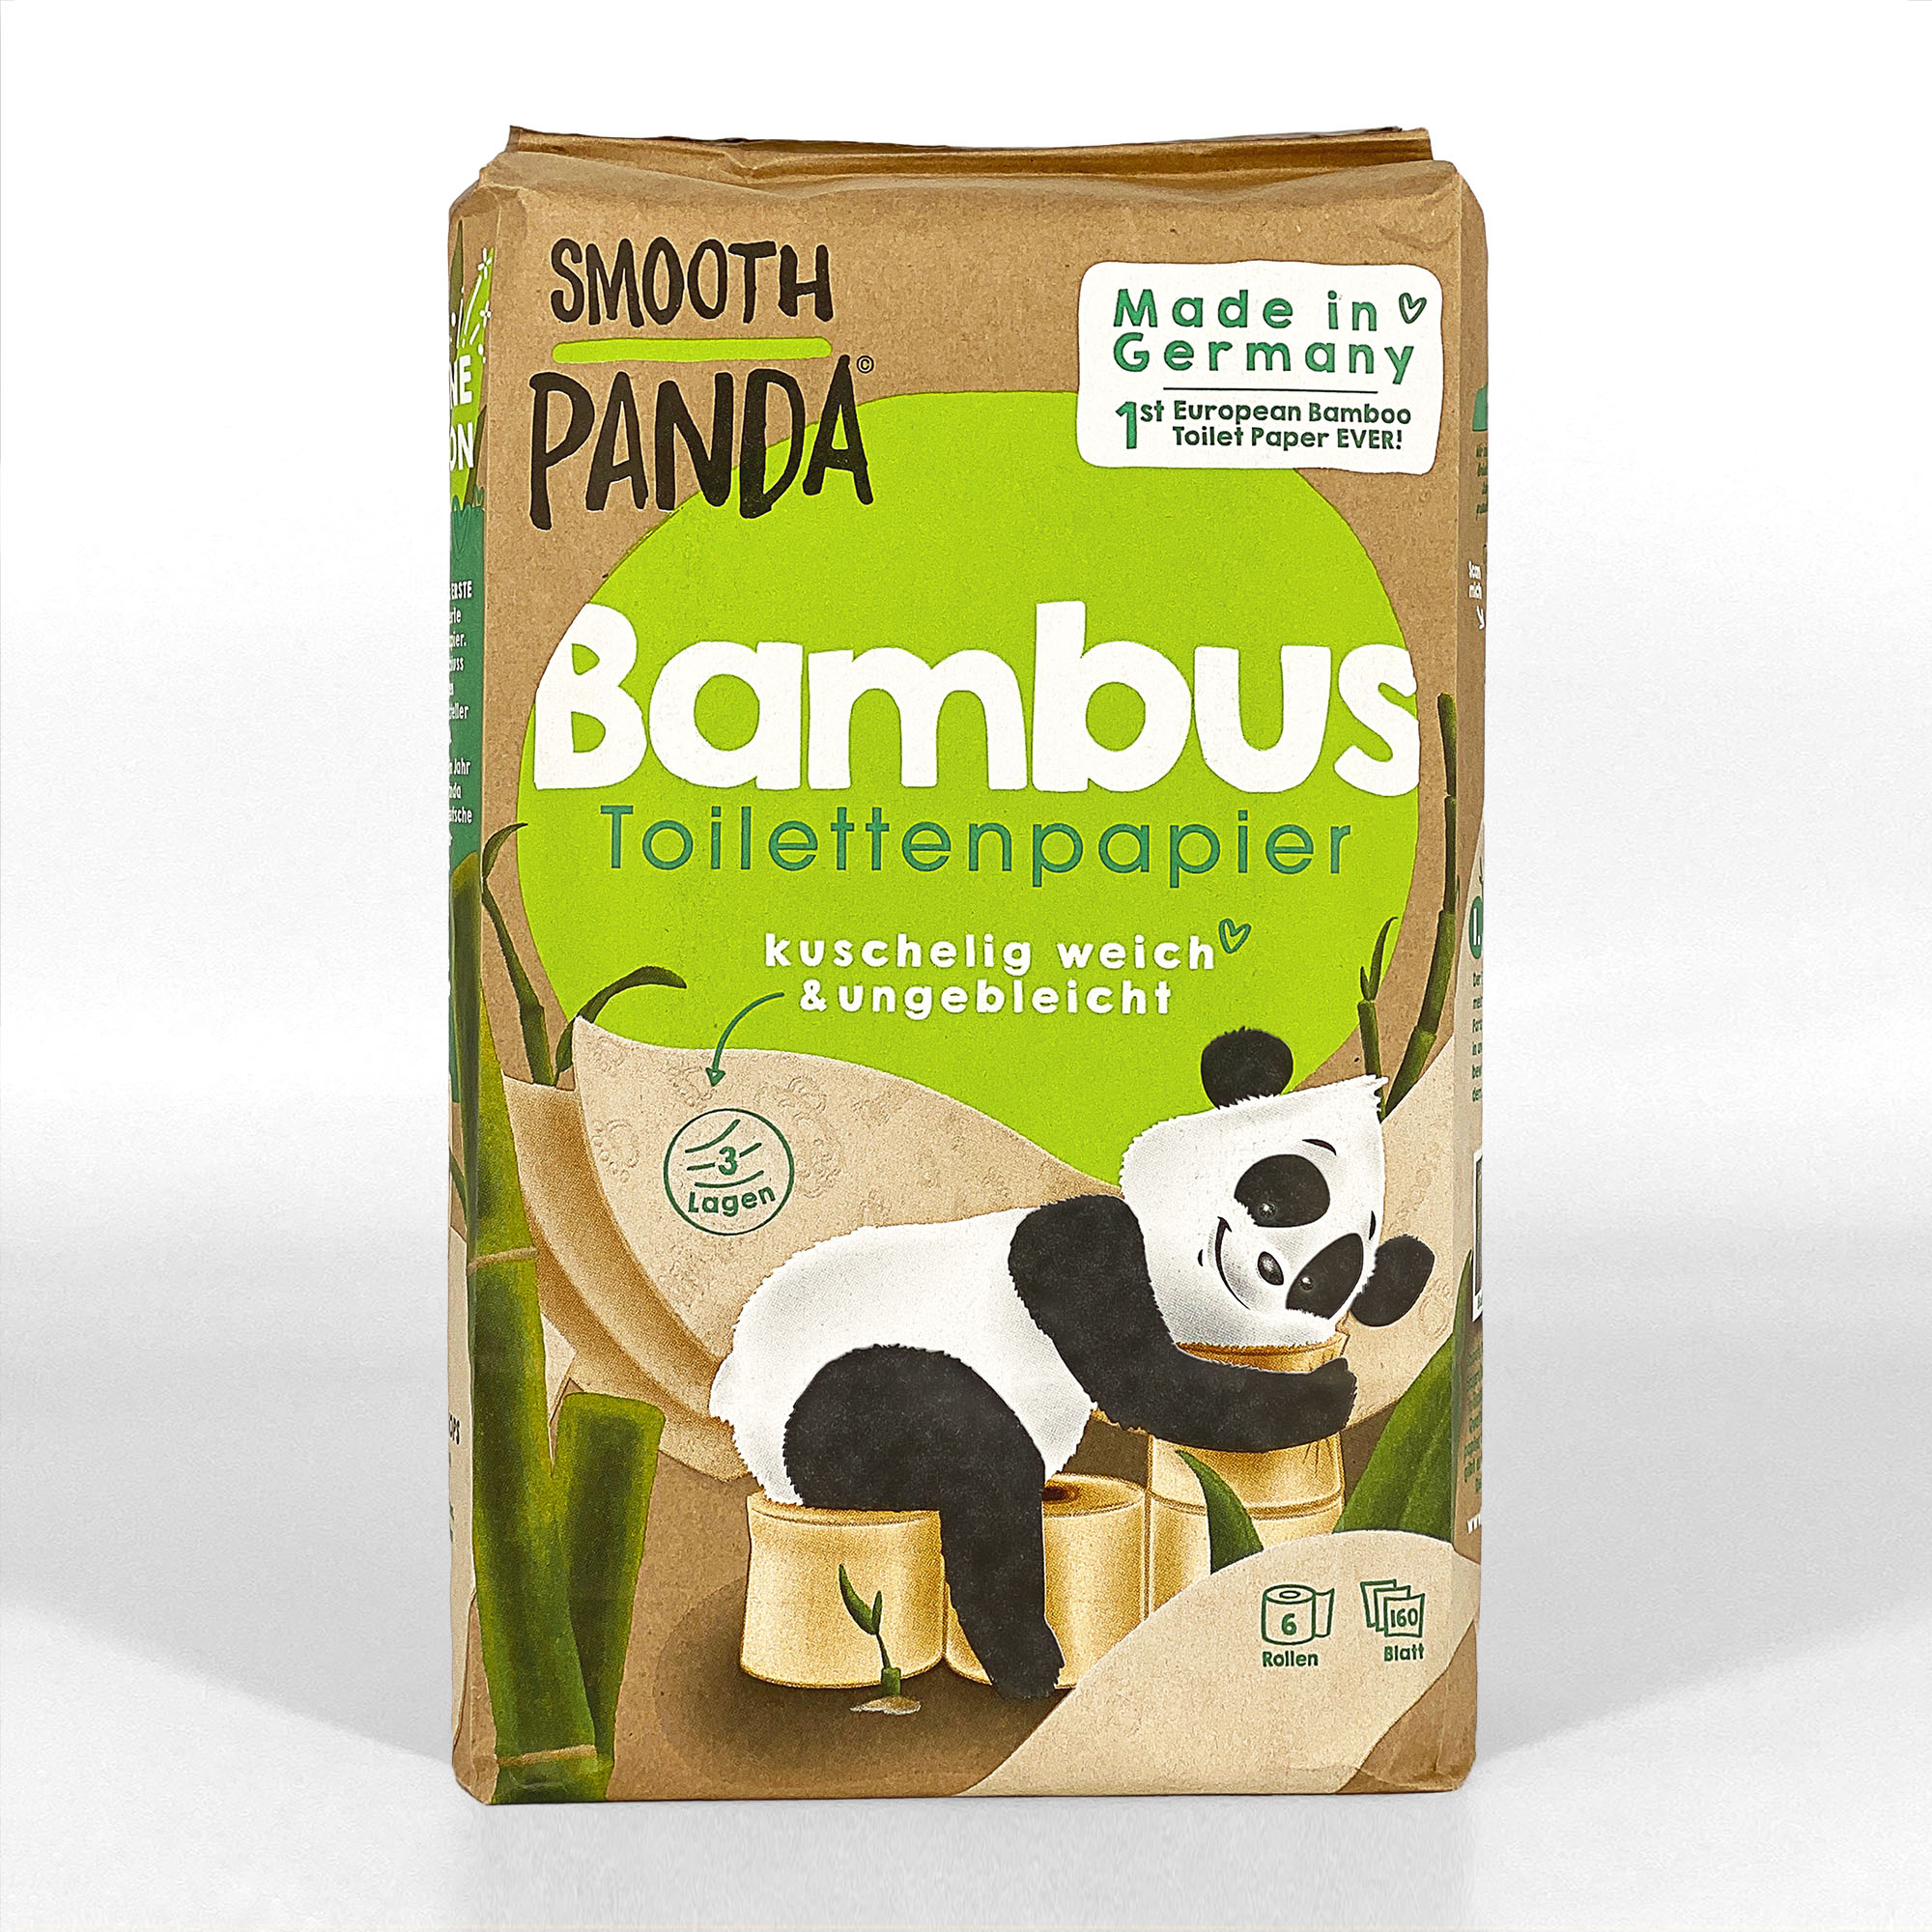 Smooth Panda - Bambus-Toilettenpapier - 6 Rollen á 160 Blatt (Made in Germany)